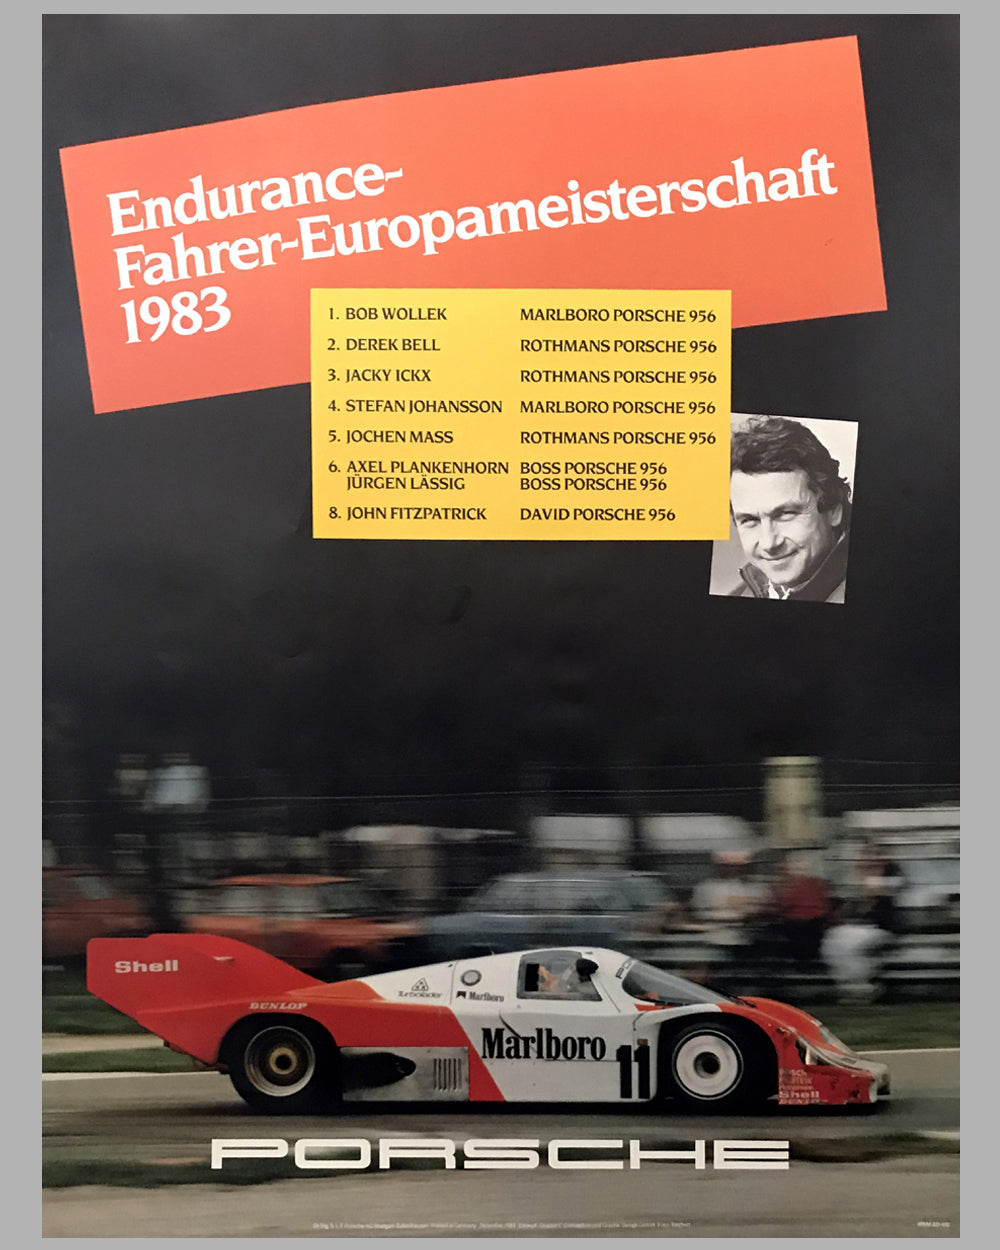 1983 European Endurance Champion Porsche Victory Poster